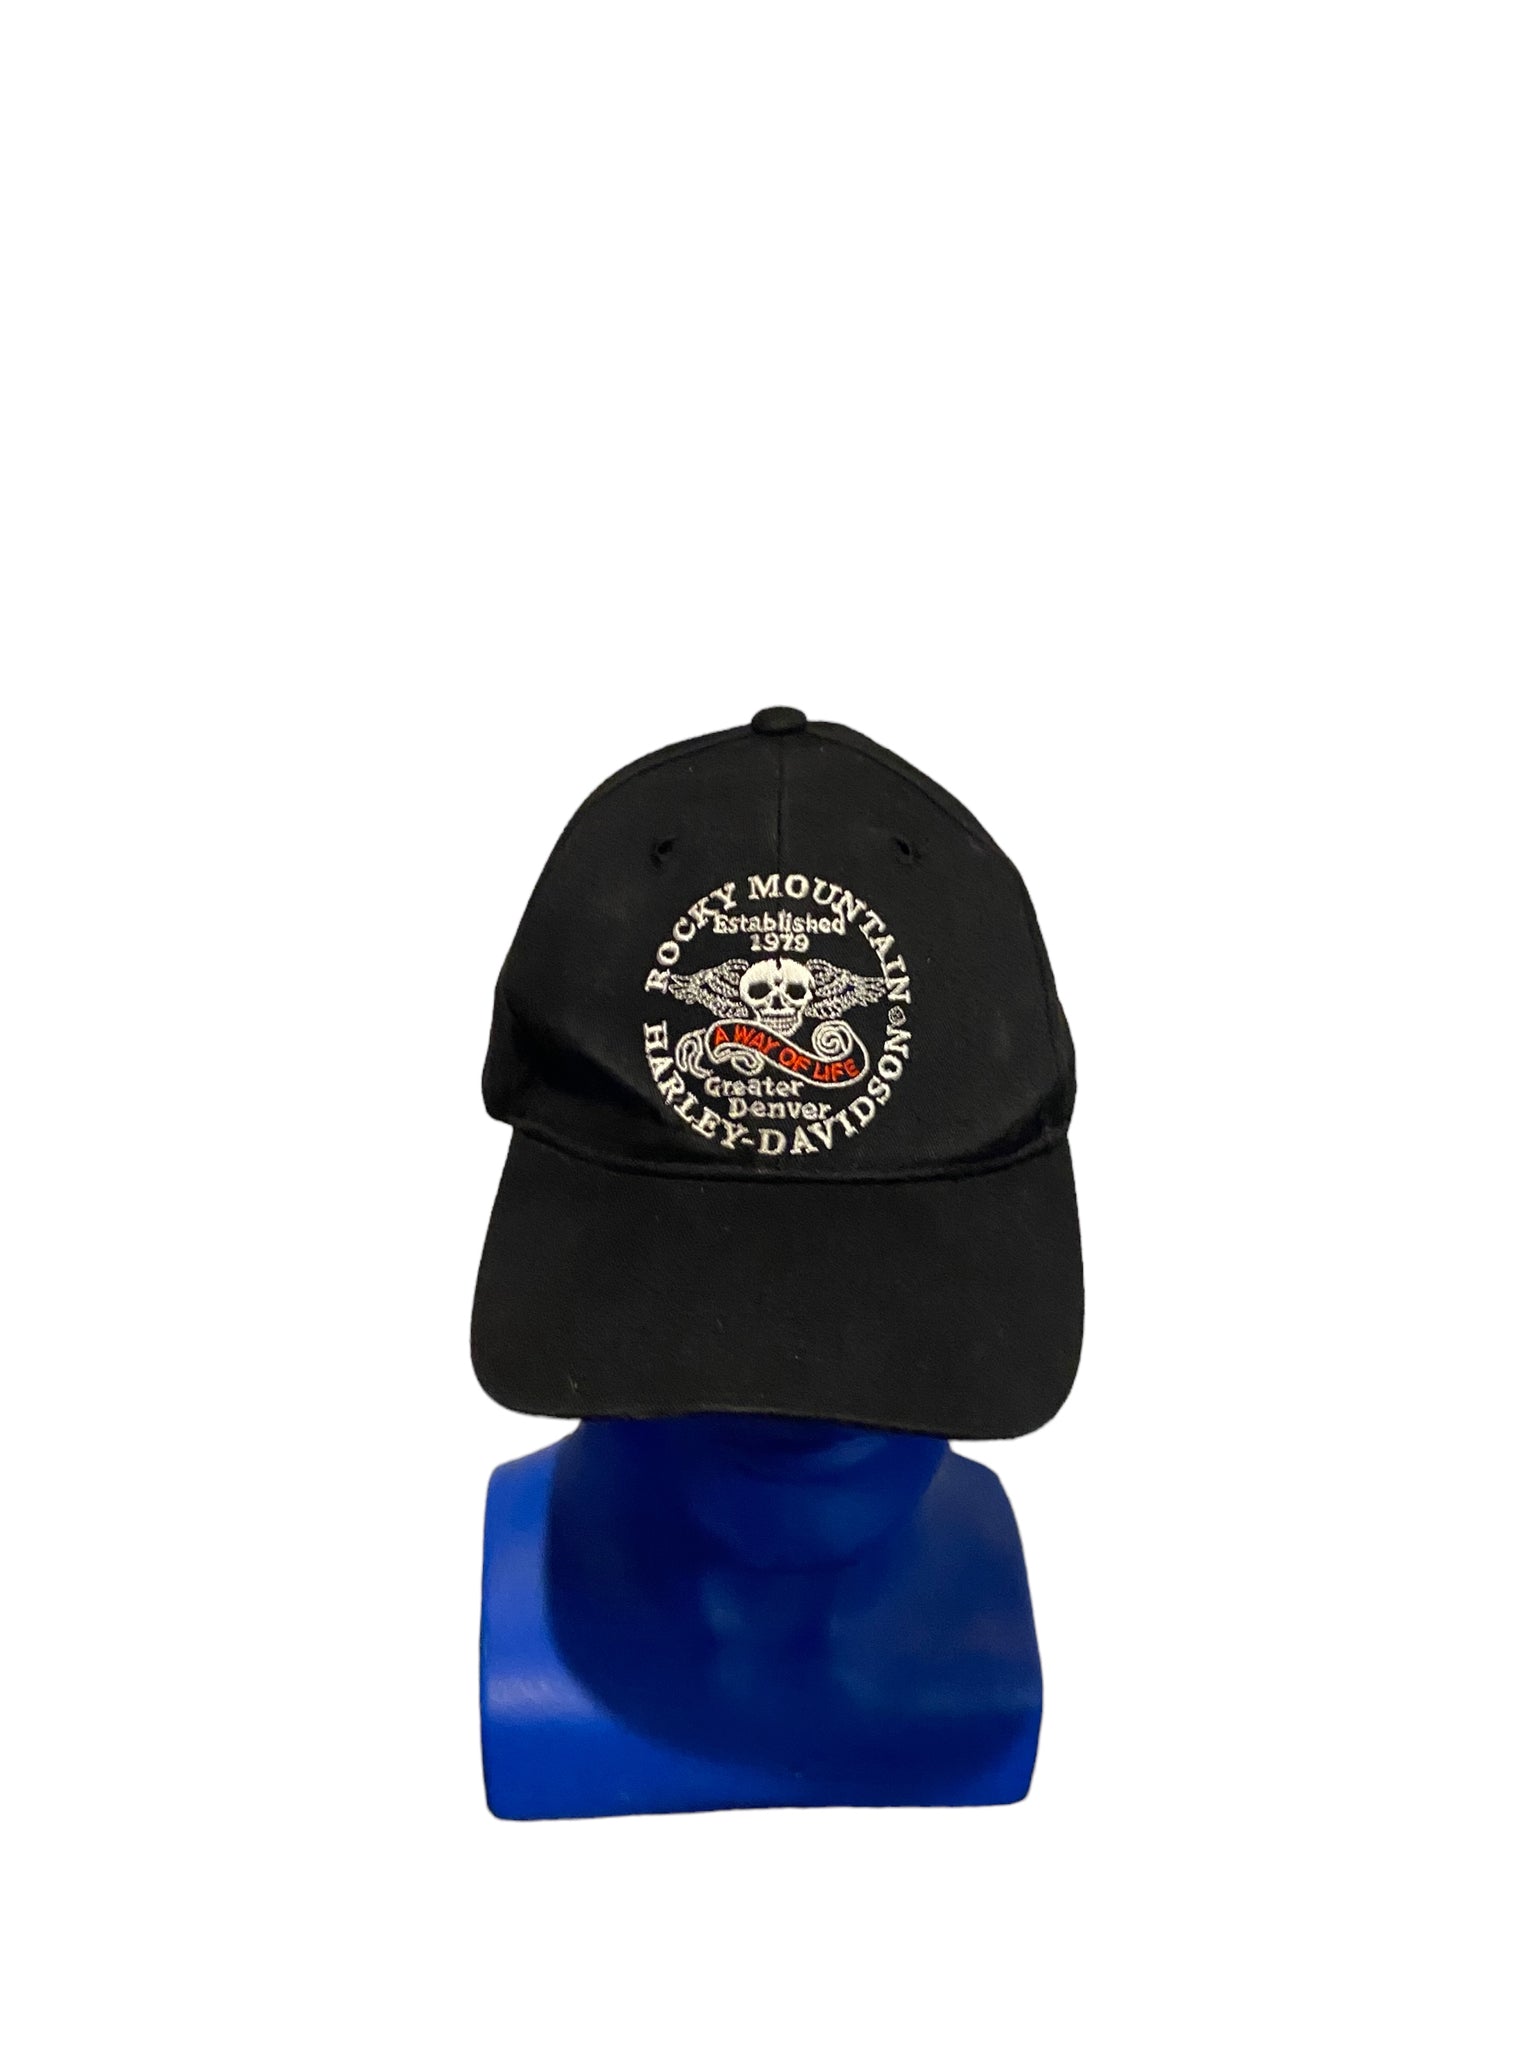 rocky mountain harley davidson embroidered logo script adj strap hat